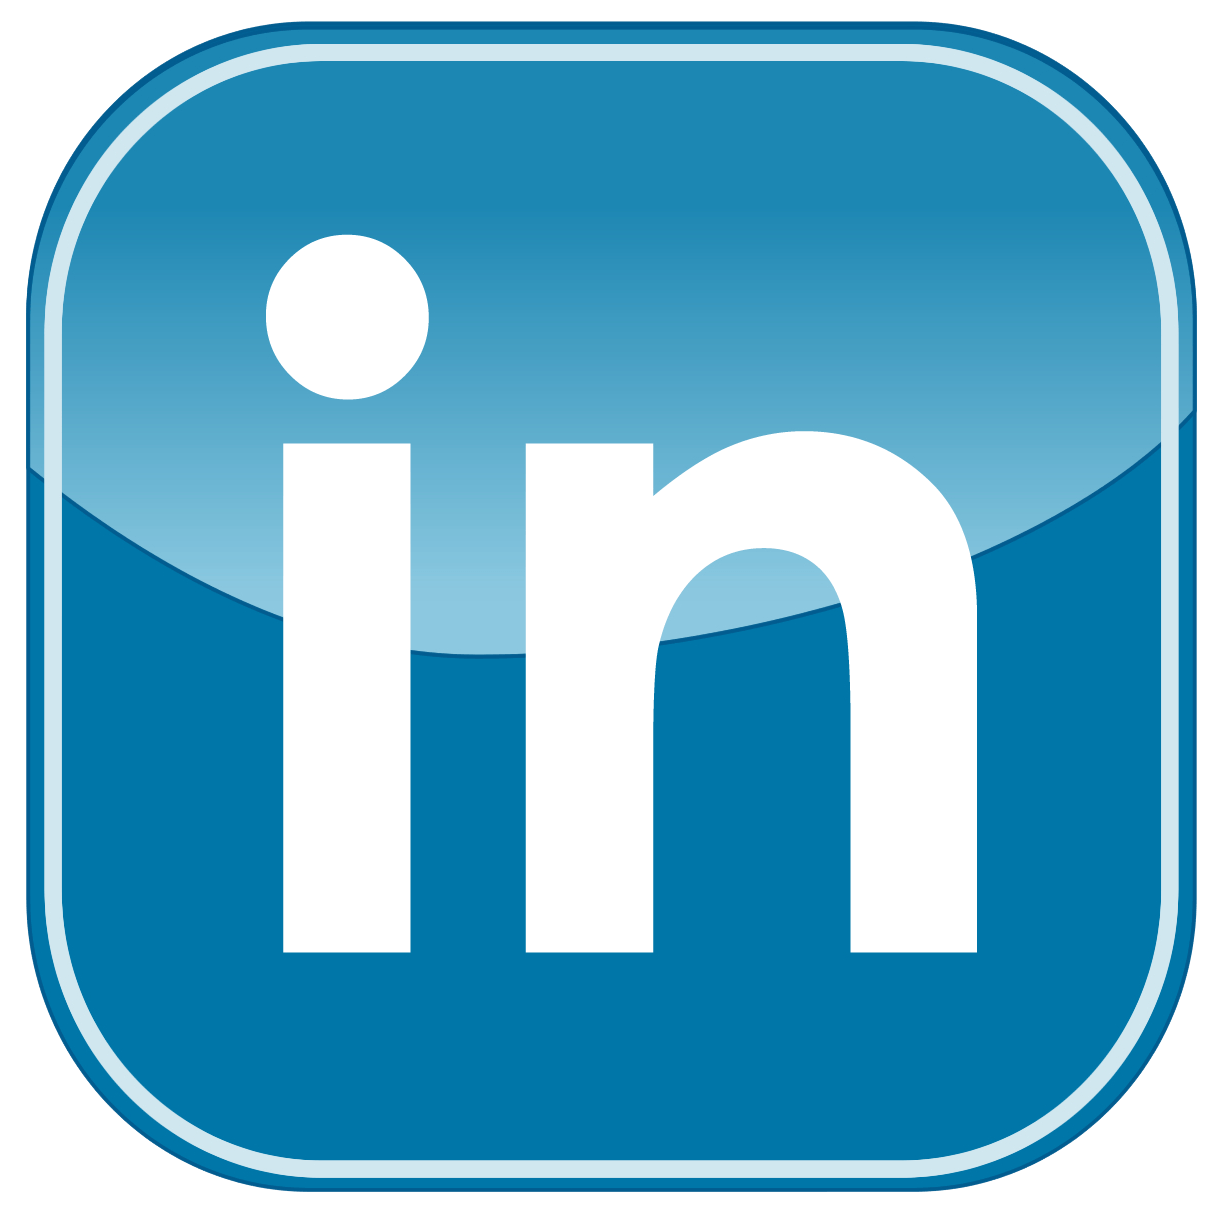 New LinkedIn Logo - 100+ LinkedIn LOGO - Latest LinkedIn Logo, Icon, GIF, Transparent PNG